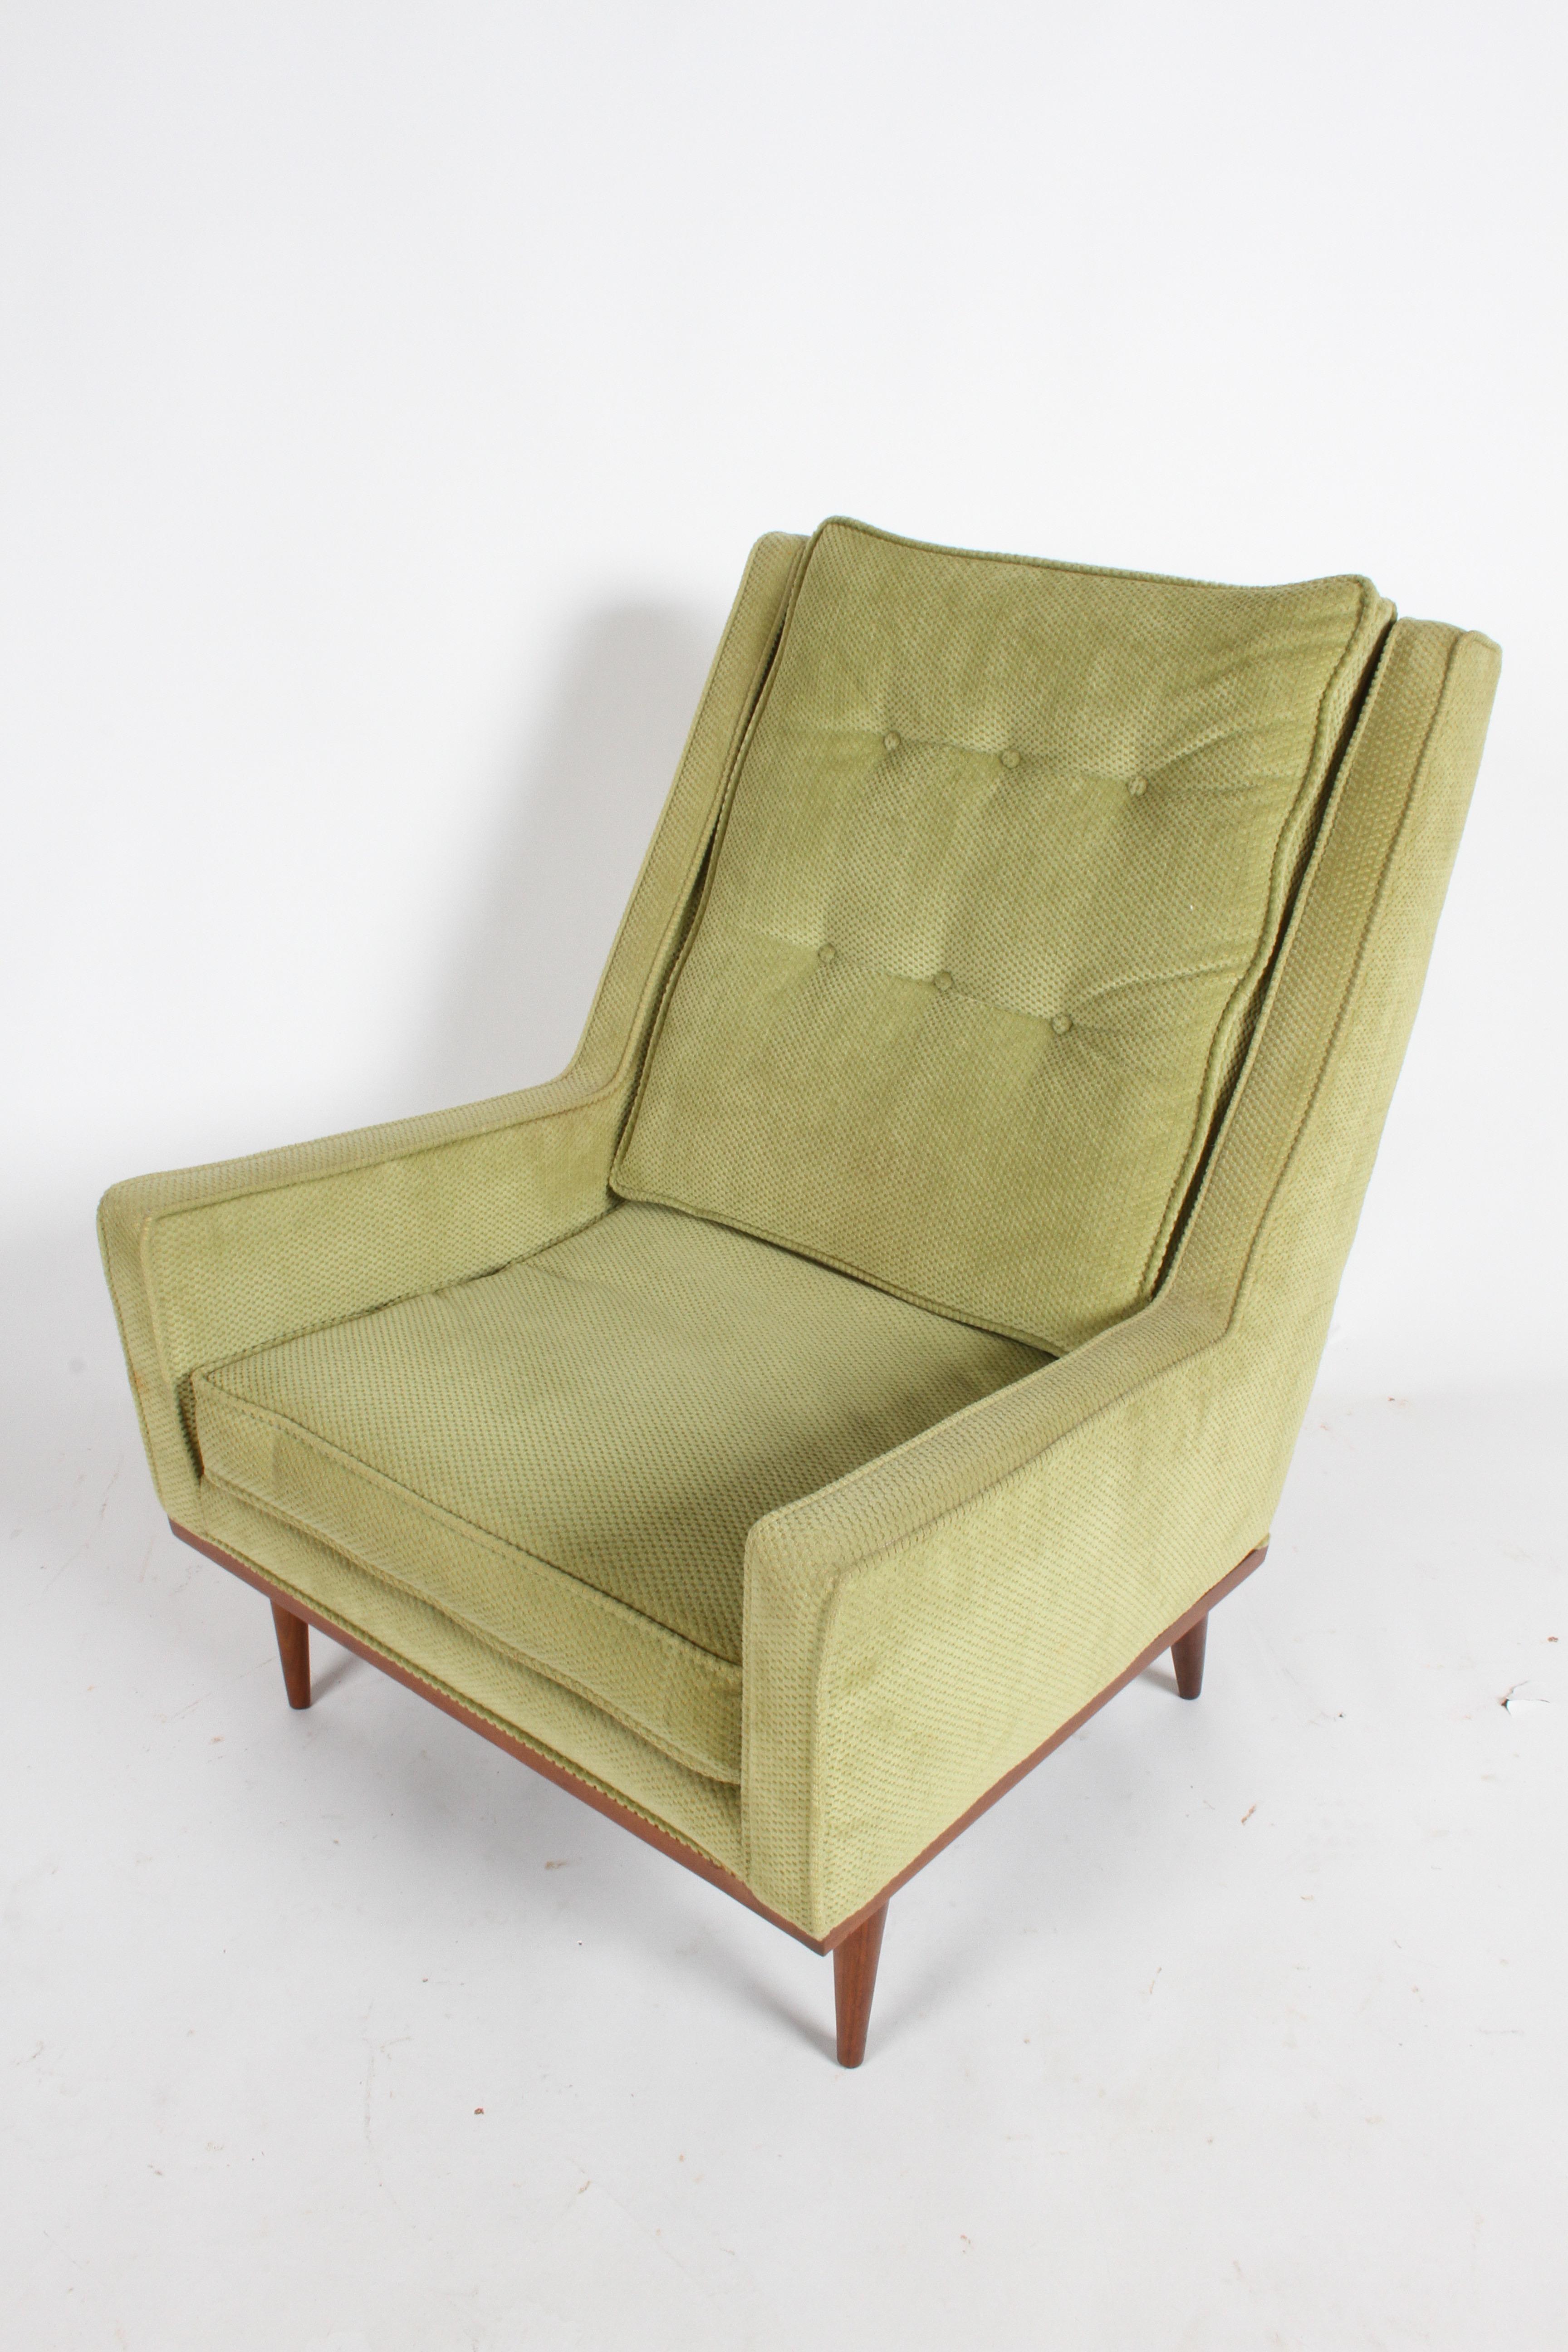 Mid-20th Century Milo Baughman for James Inc. Lounge Chair